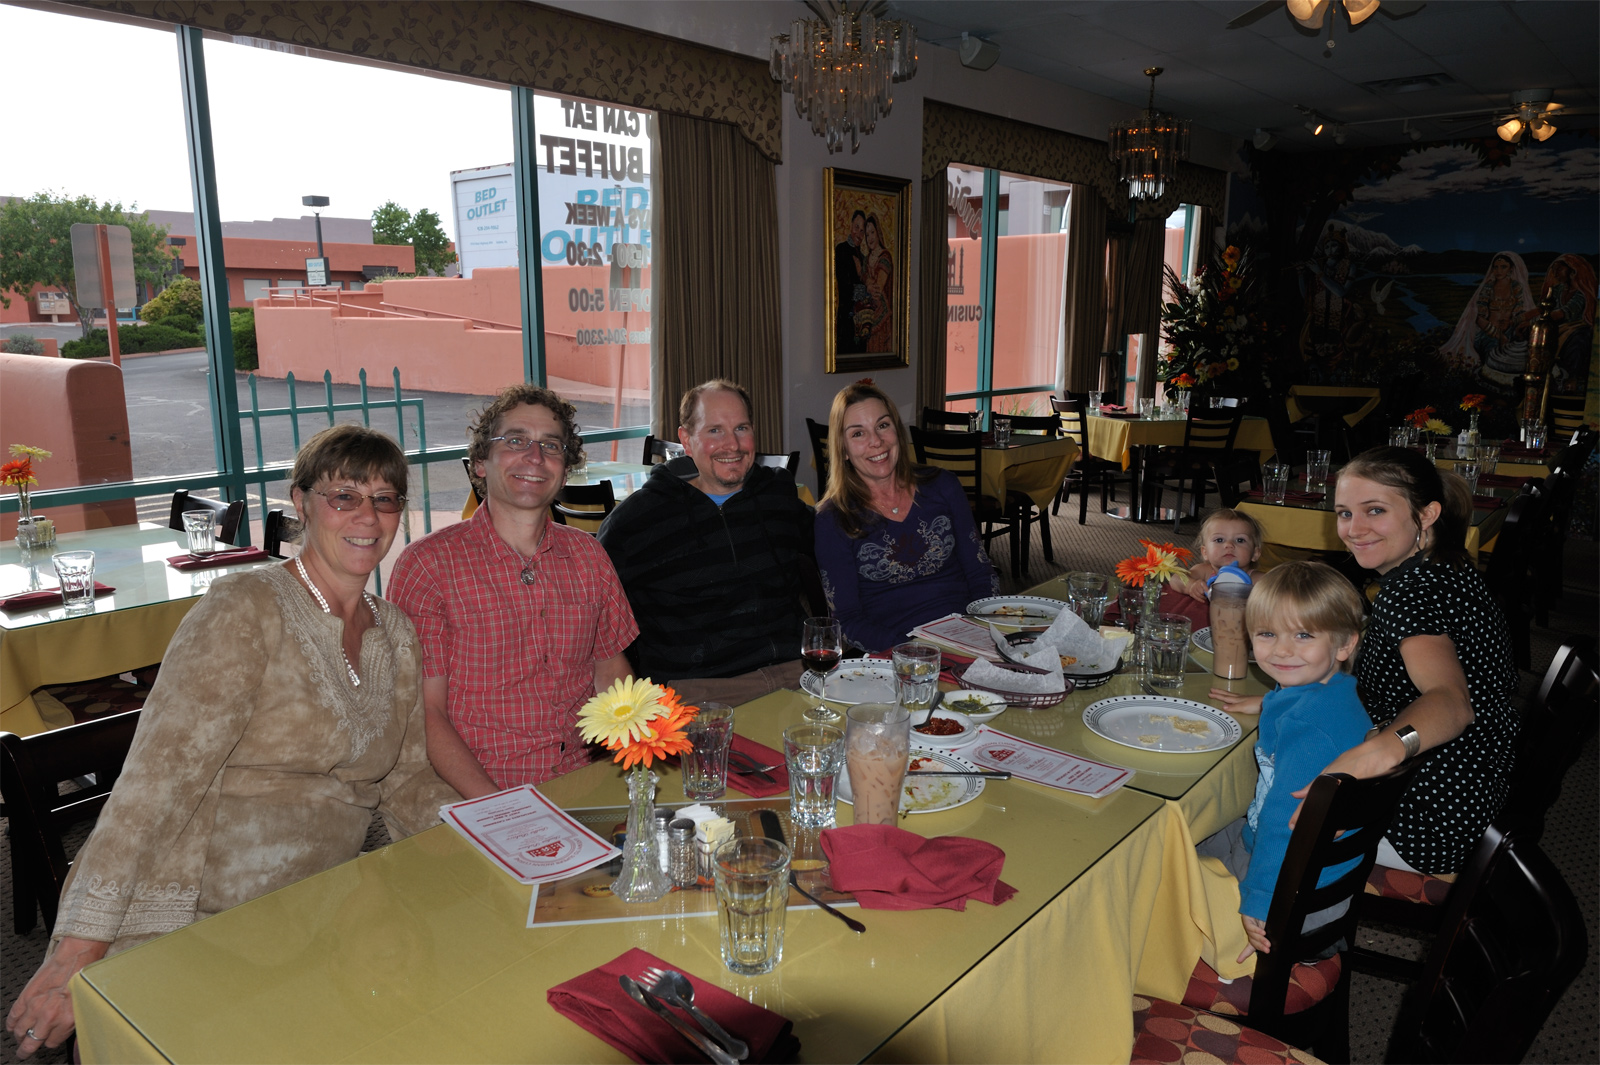 Adele and me, Marc and Keri, Dia, Niko, and Sarah considering the dinner menu at INDIA PALACE®